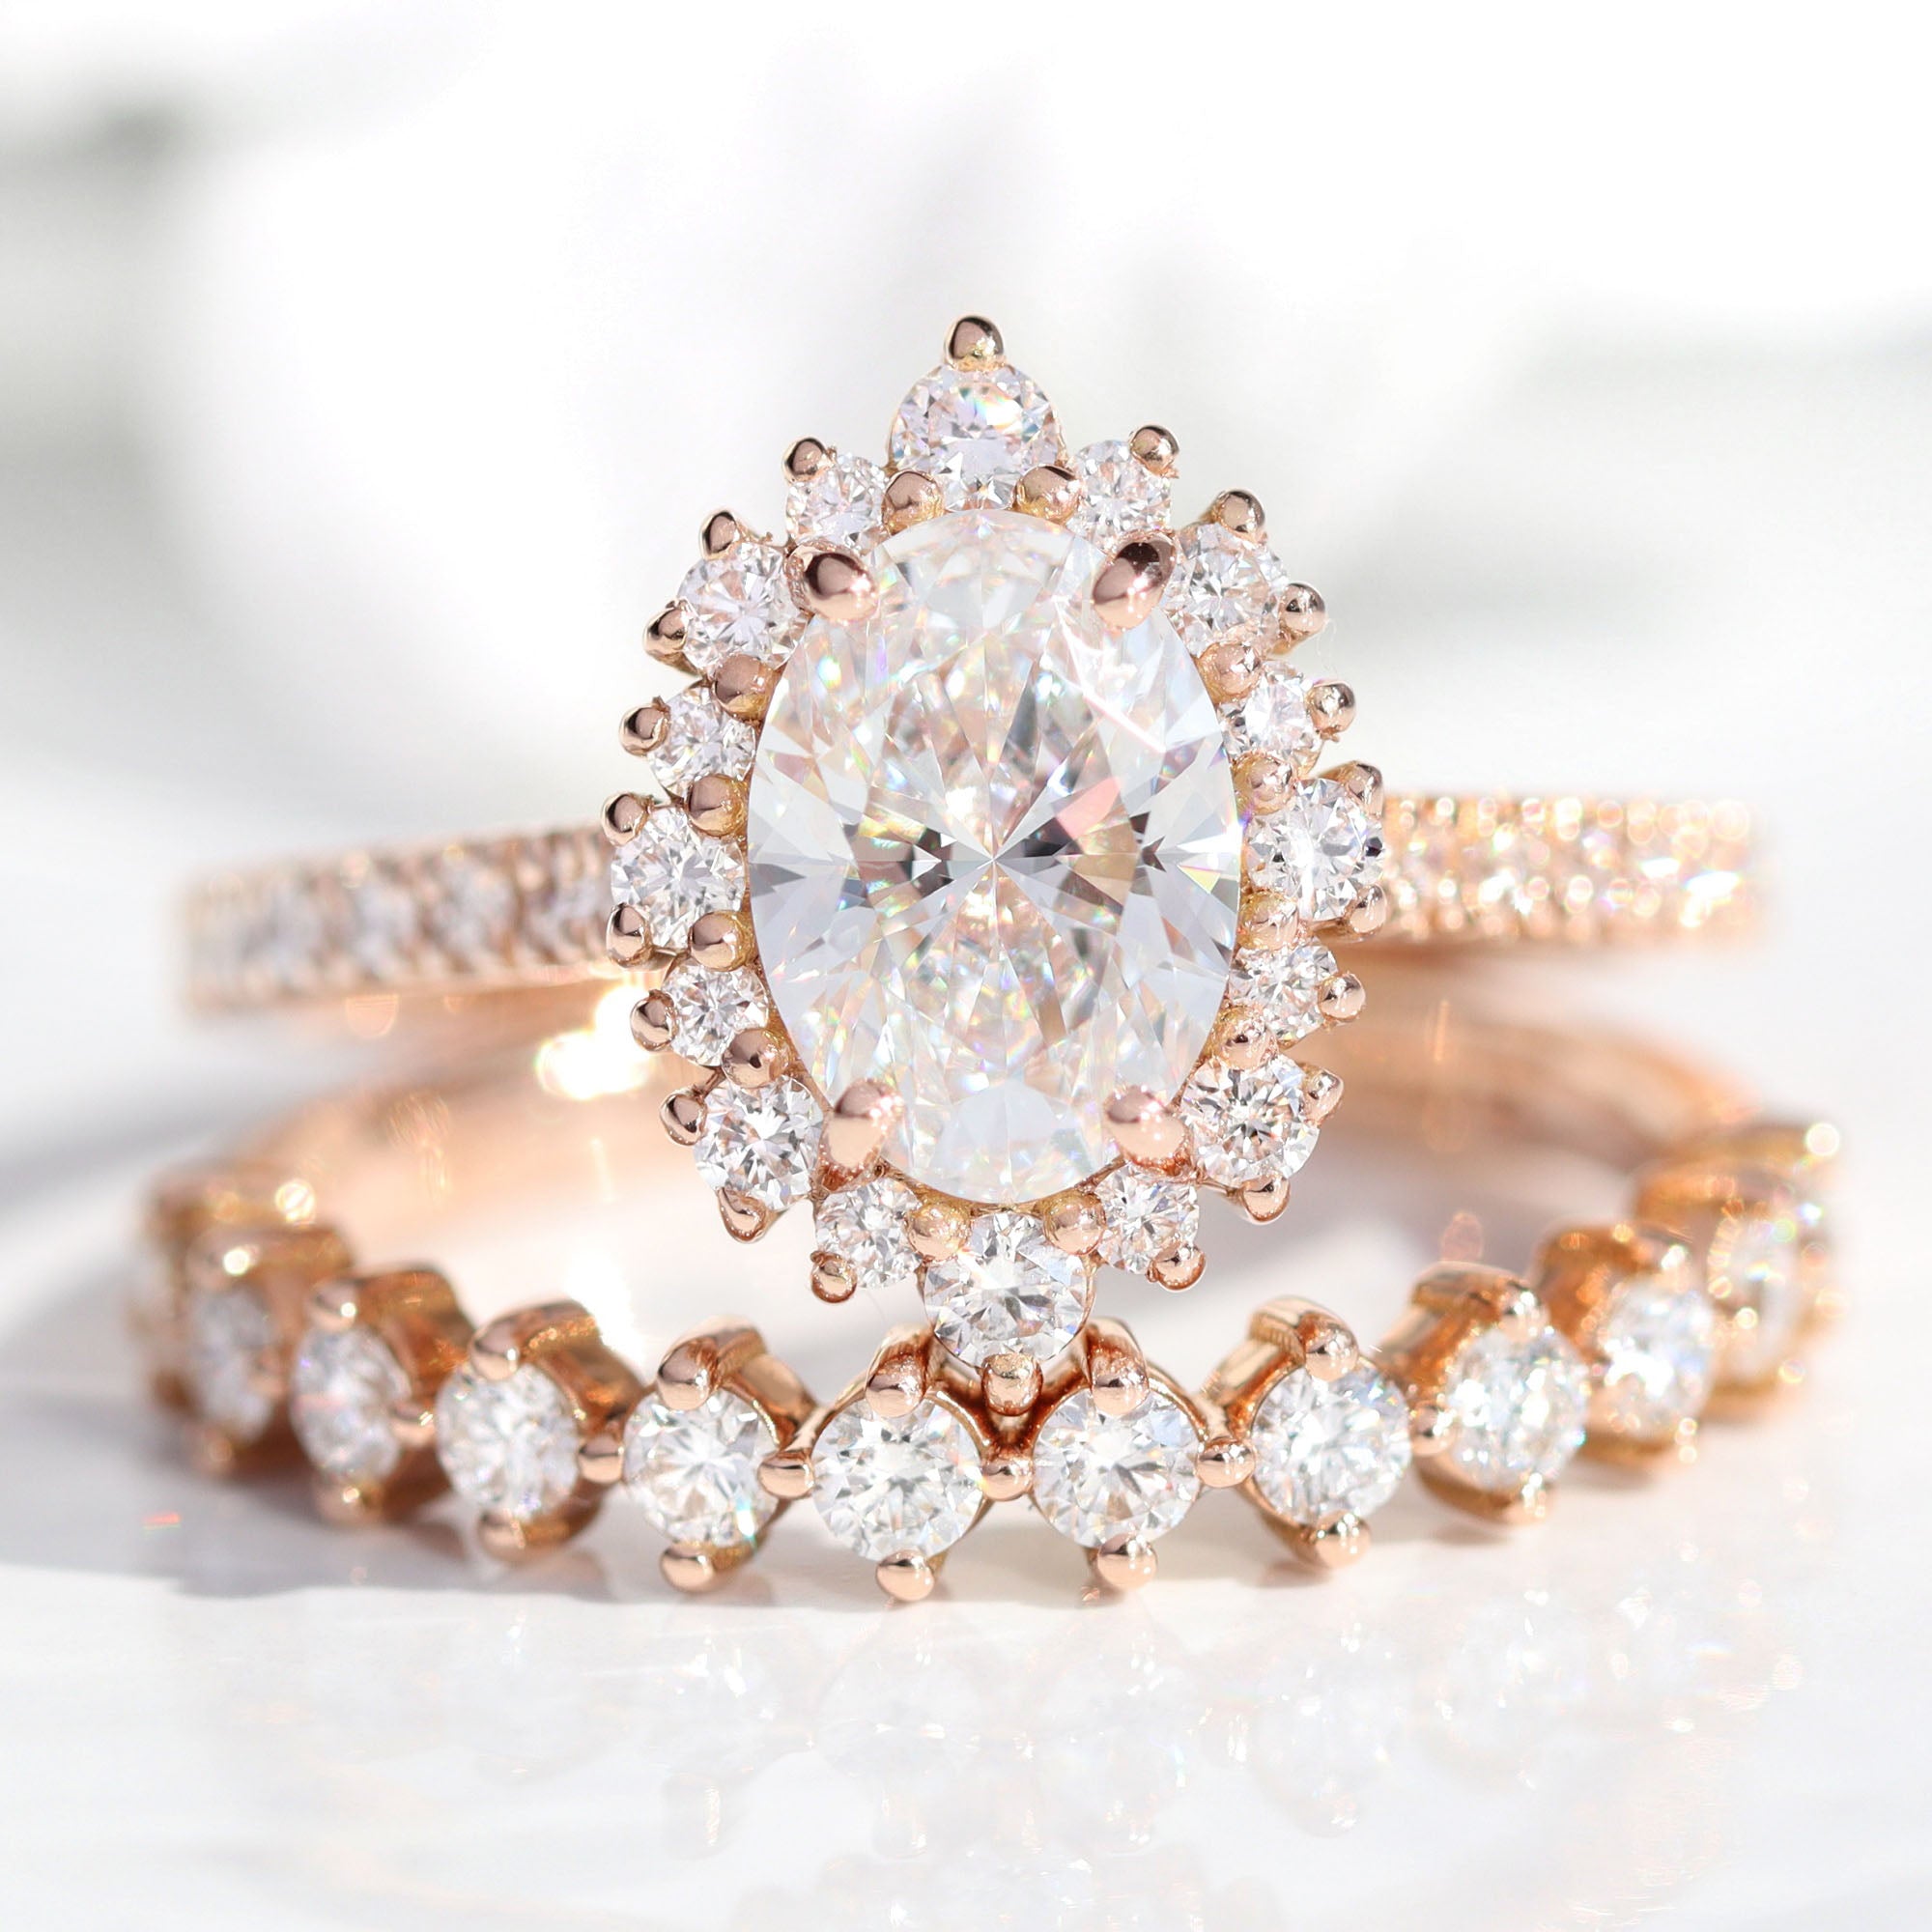 lab diamond ring stack rose gold halo oval diamond engagement ring set La More Design Jewelry